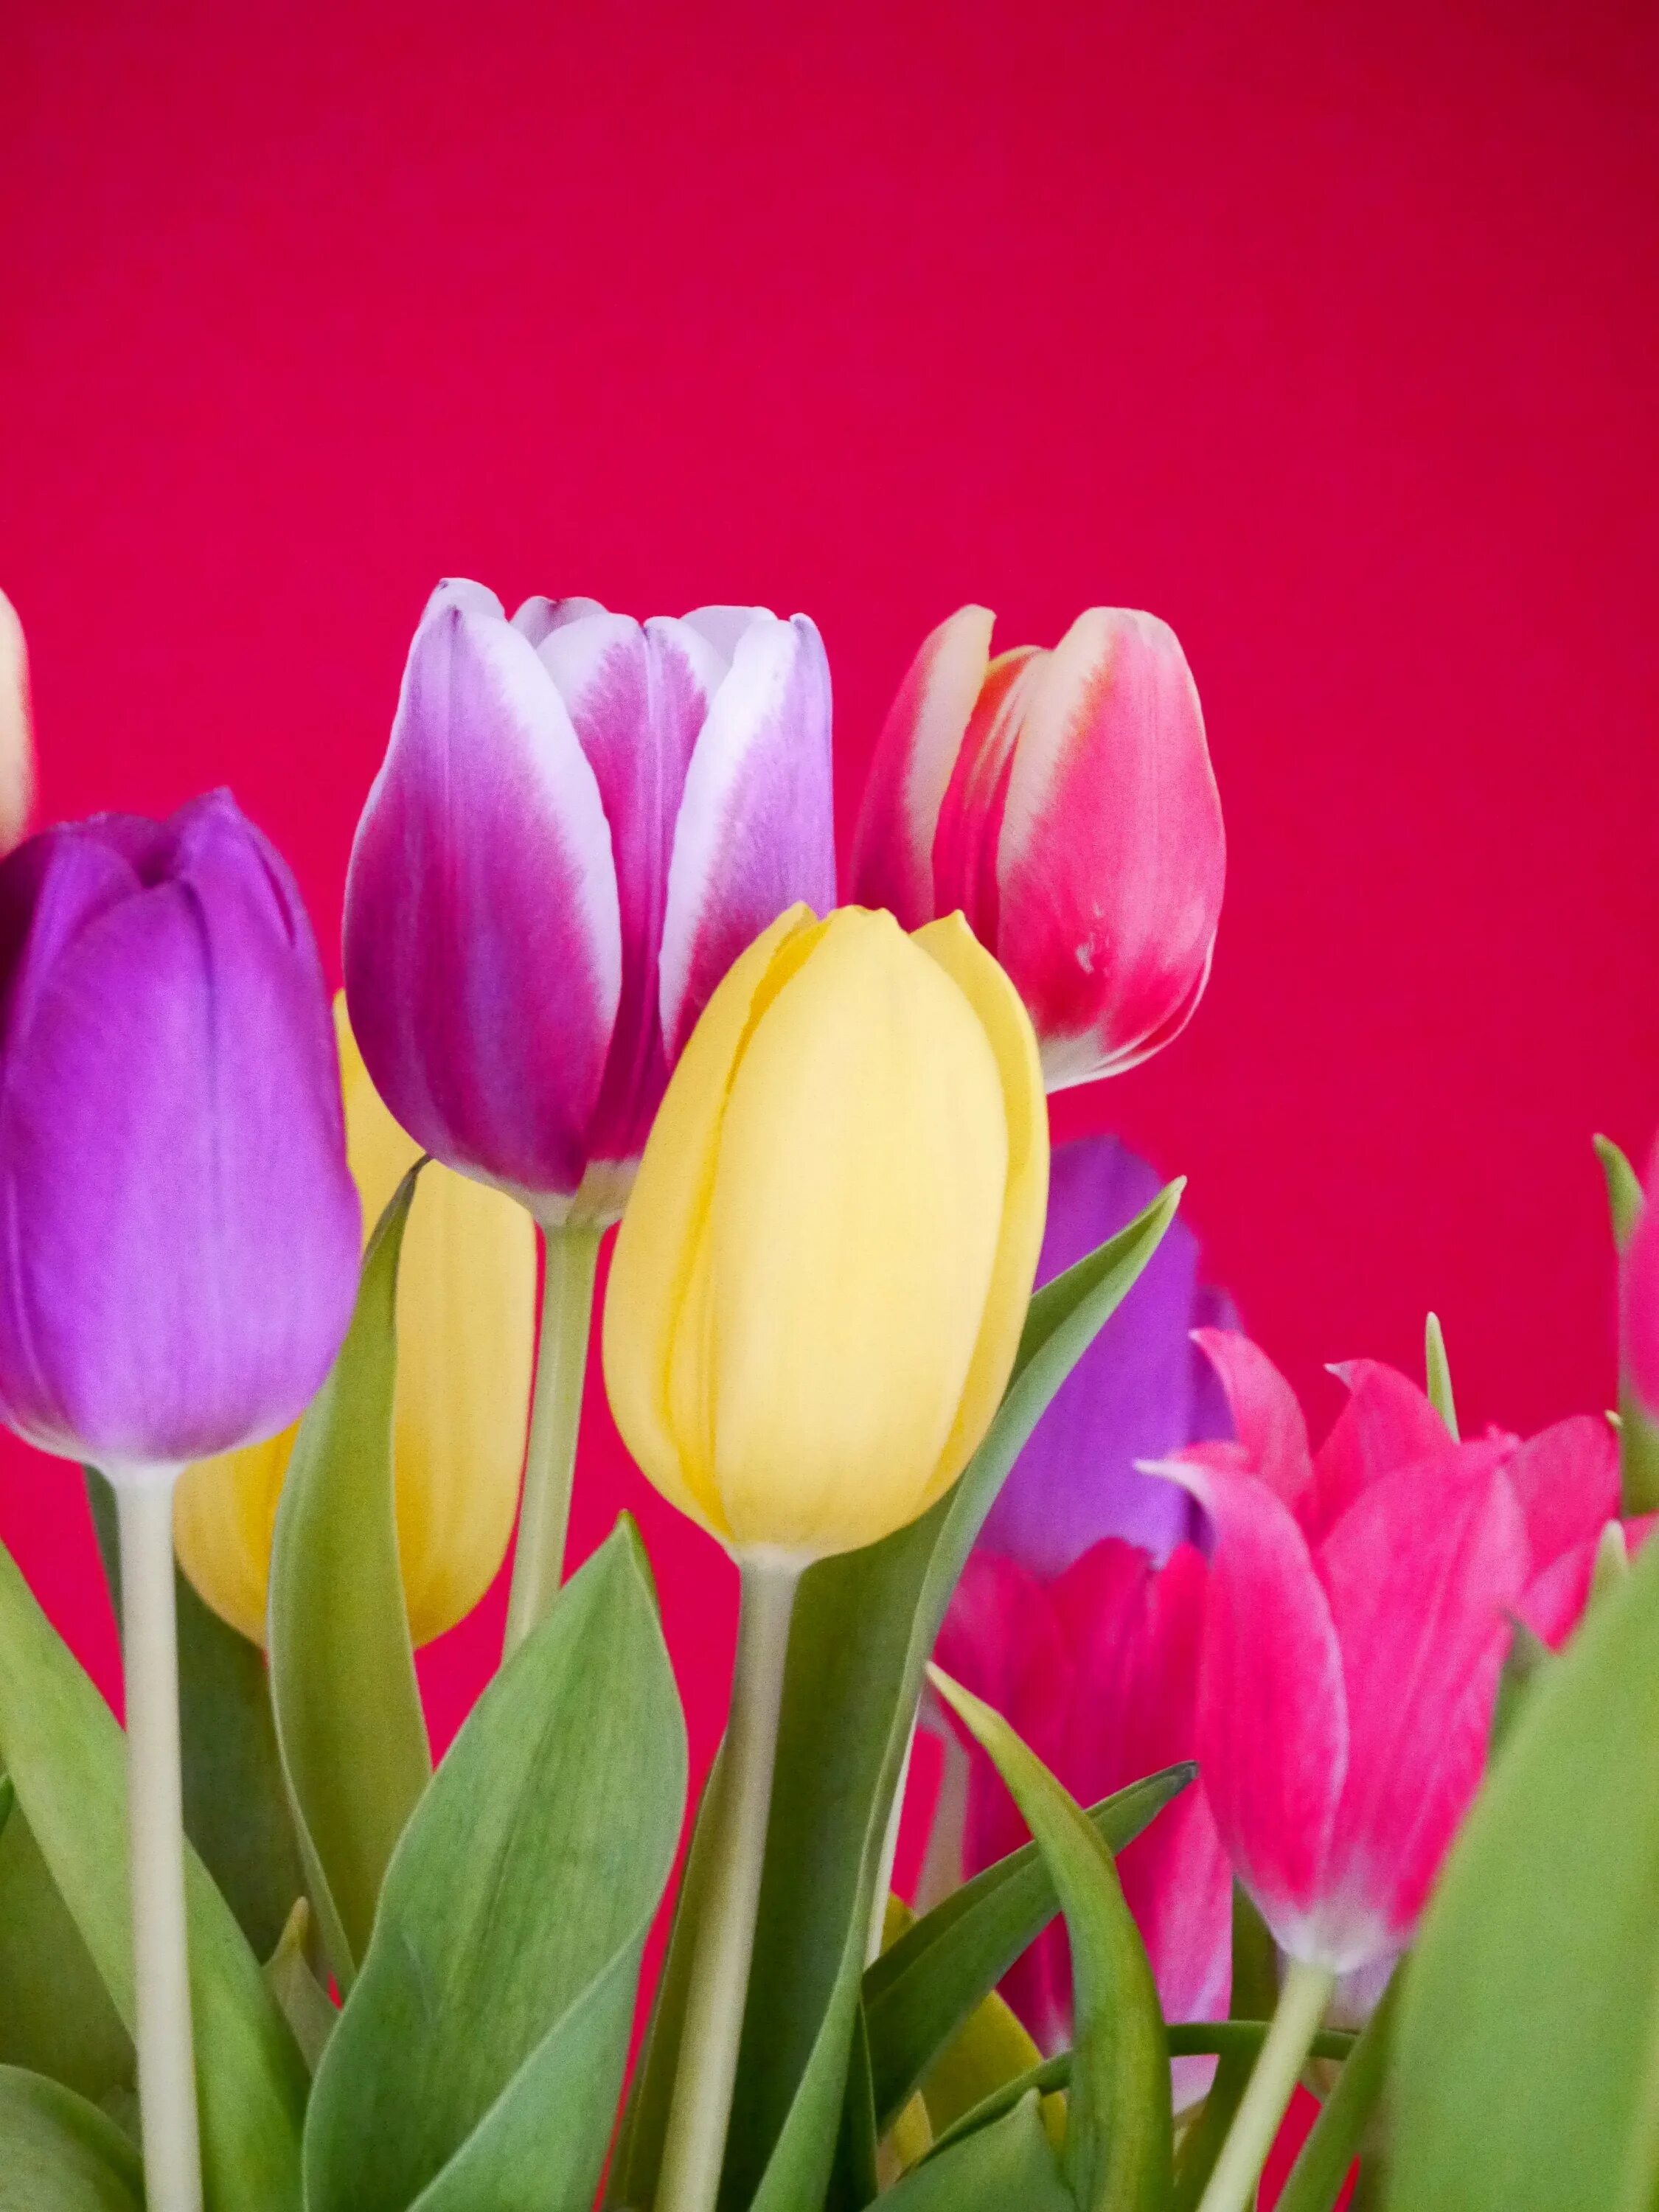 Цветы тюльпаны. Красивые тюльпаны. Красивые разноцветные тюльпаны. Красивая тюль.